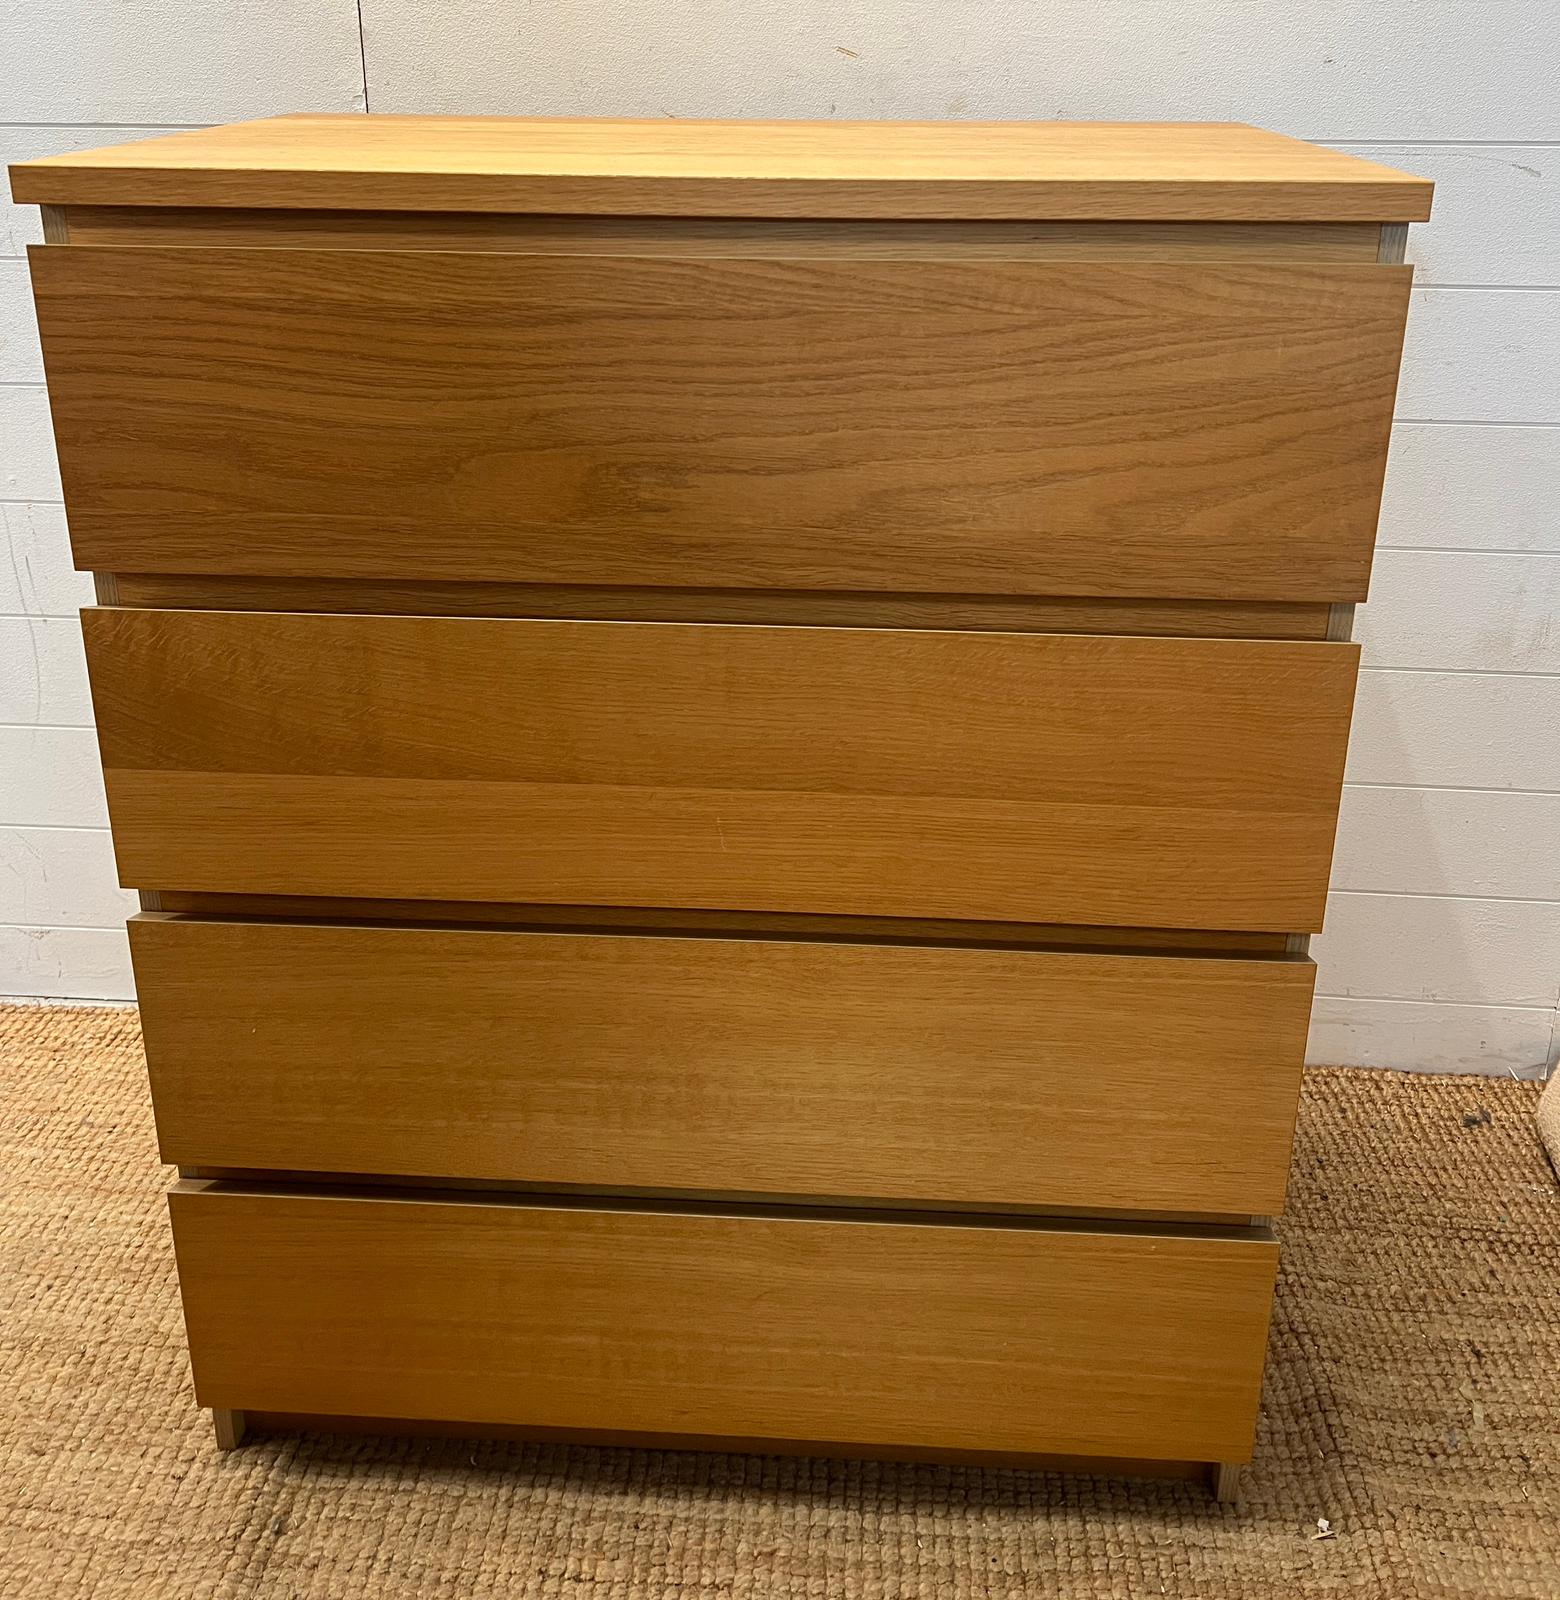 An Ikea Malm chest of drawers (H100cm W80cm D48cm)